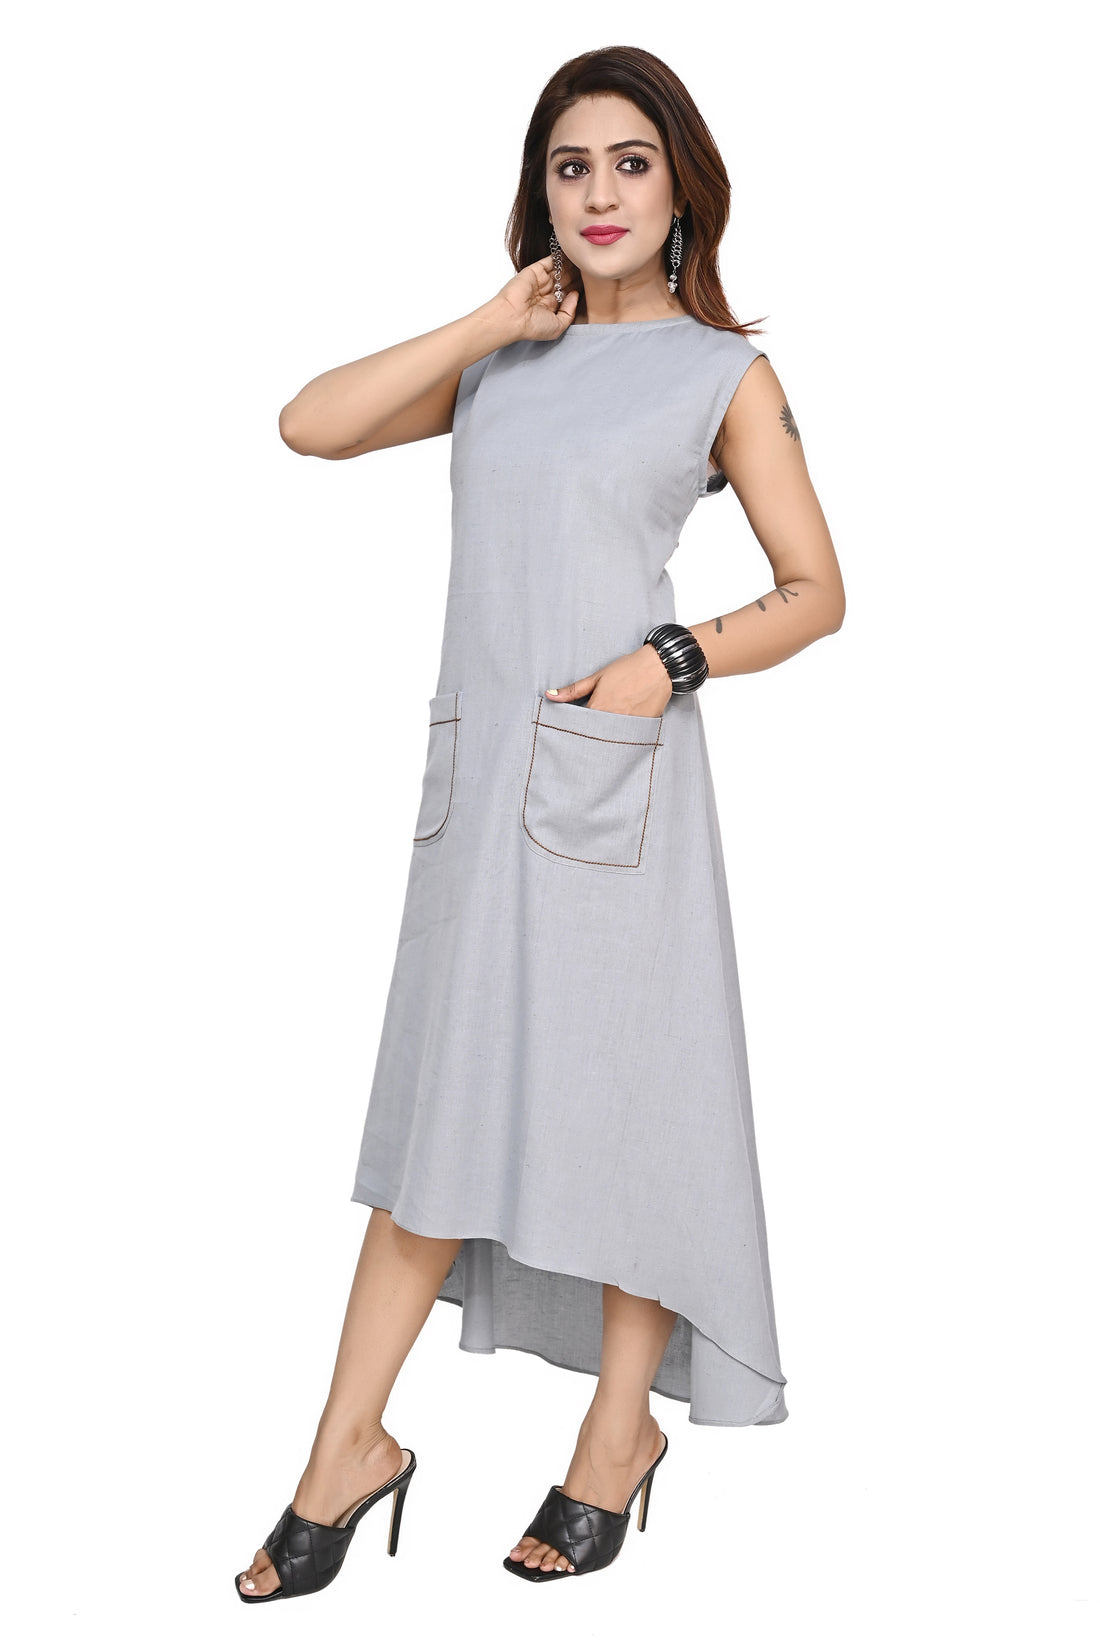 Nirmal online Premium Cotton Tunic Dress for Women in Grey Colour